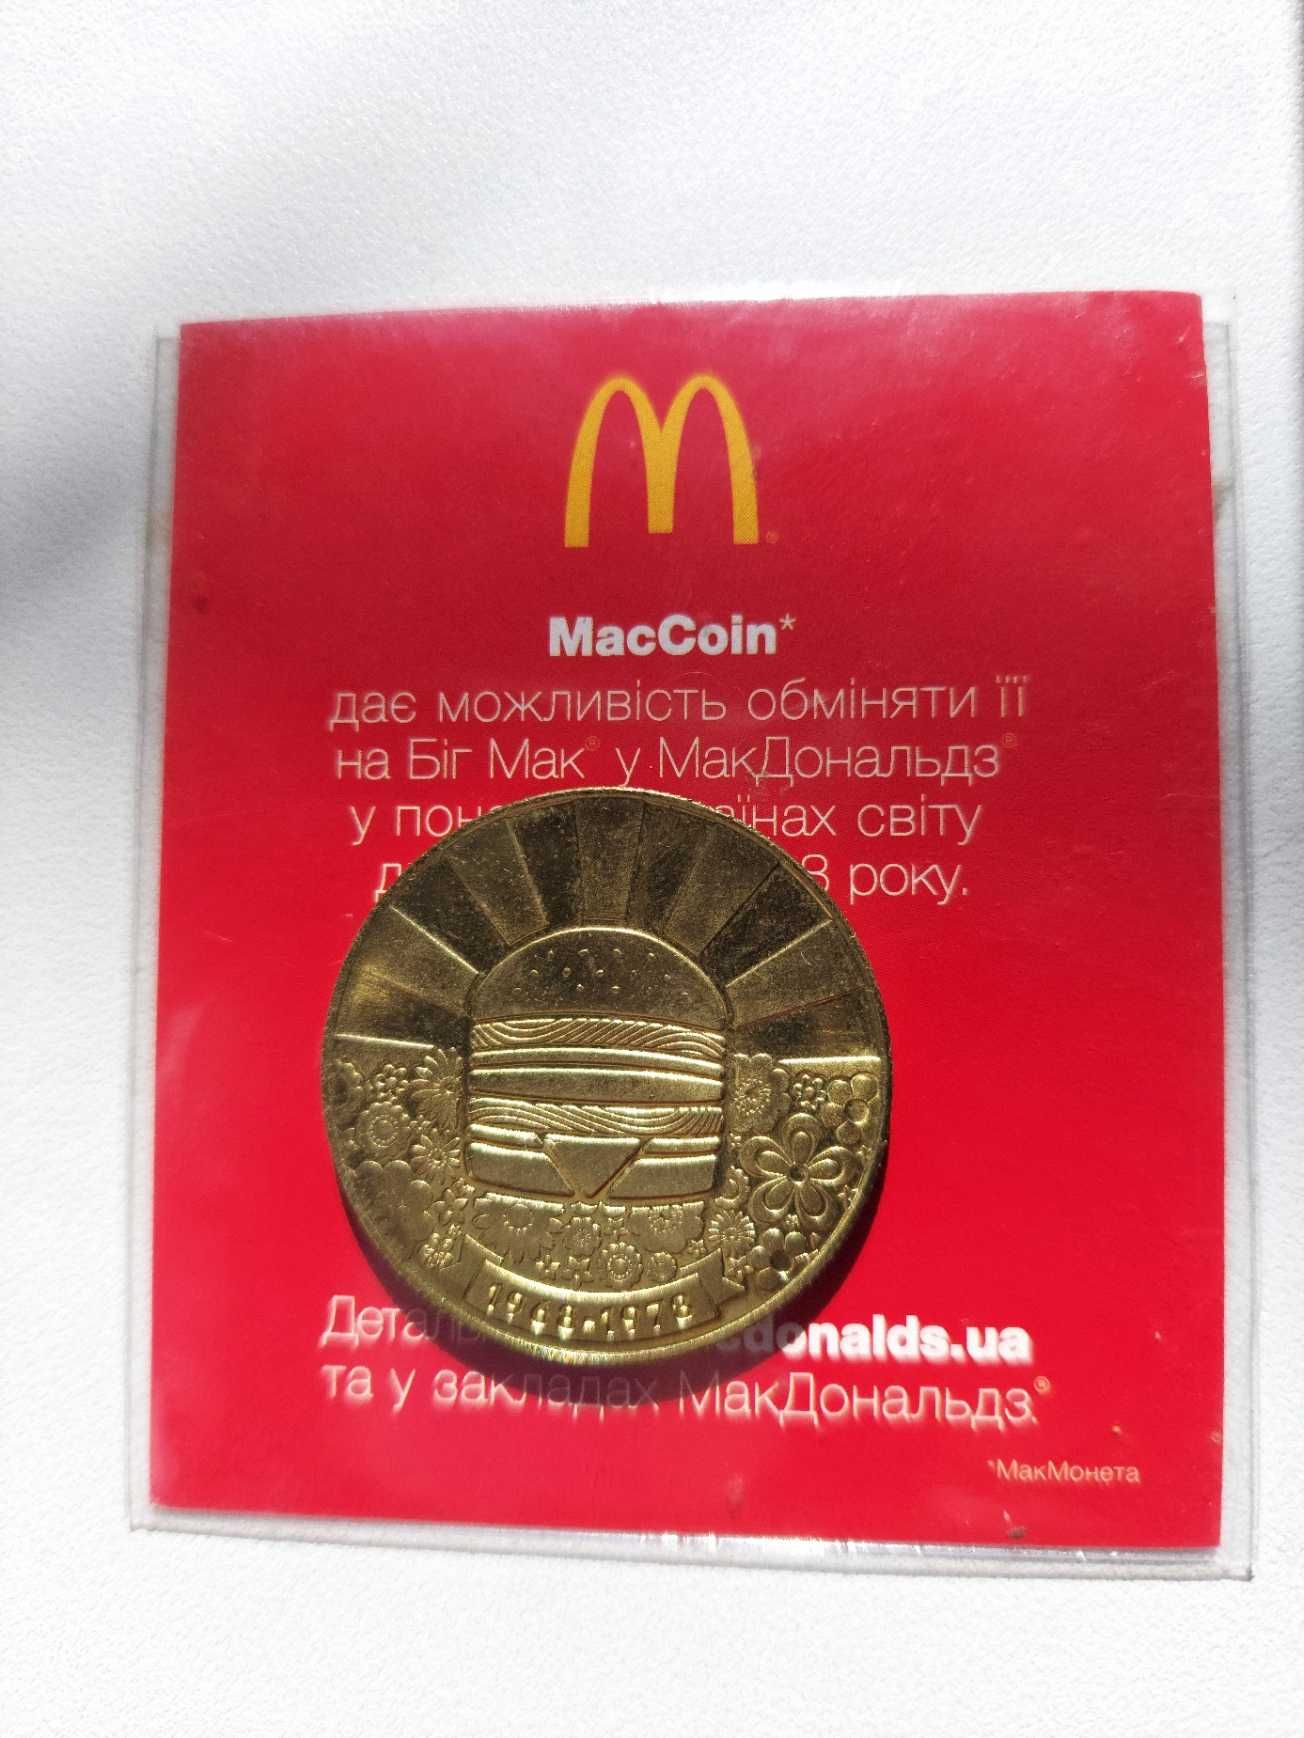 Монета MacCoin 1968-1978